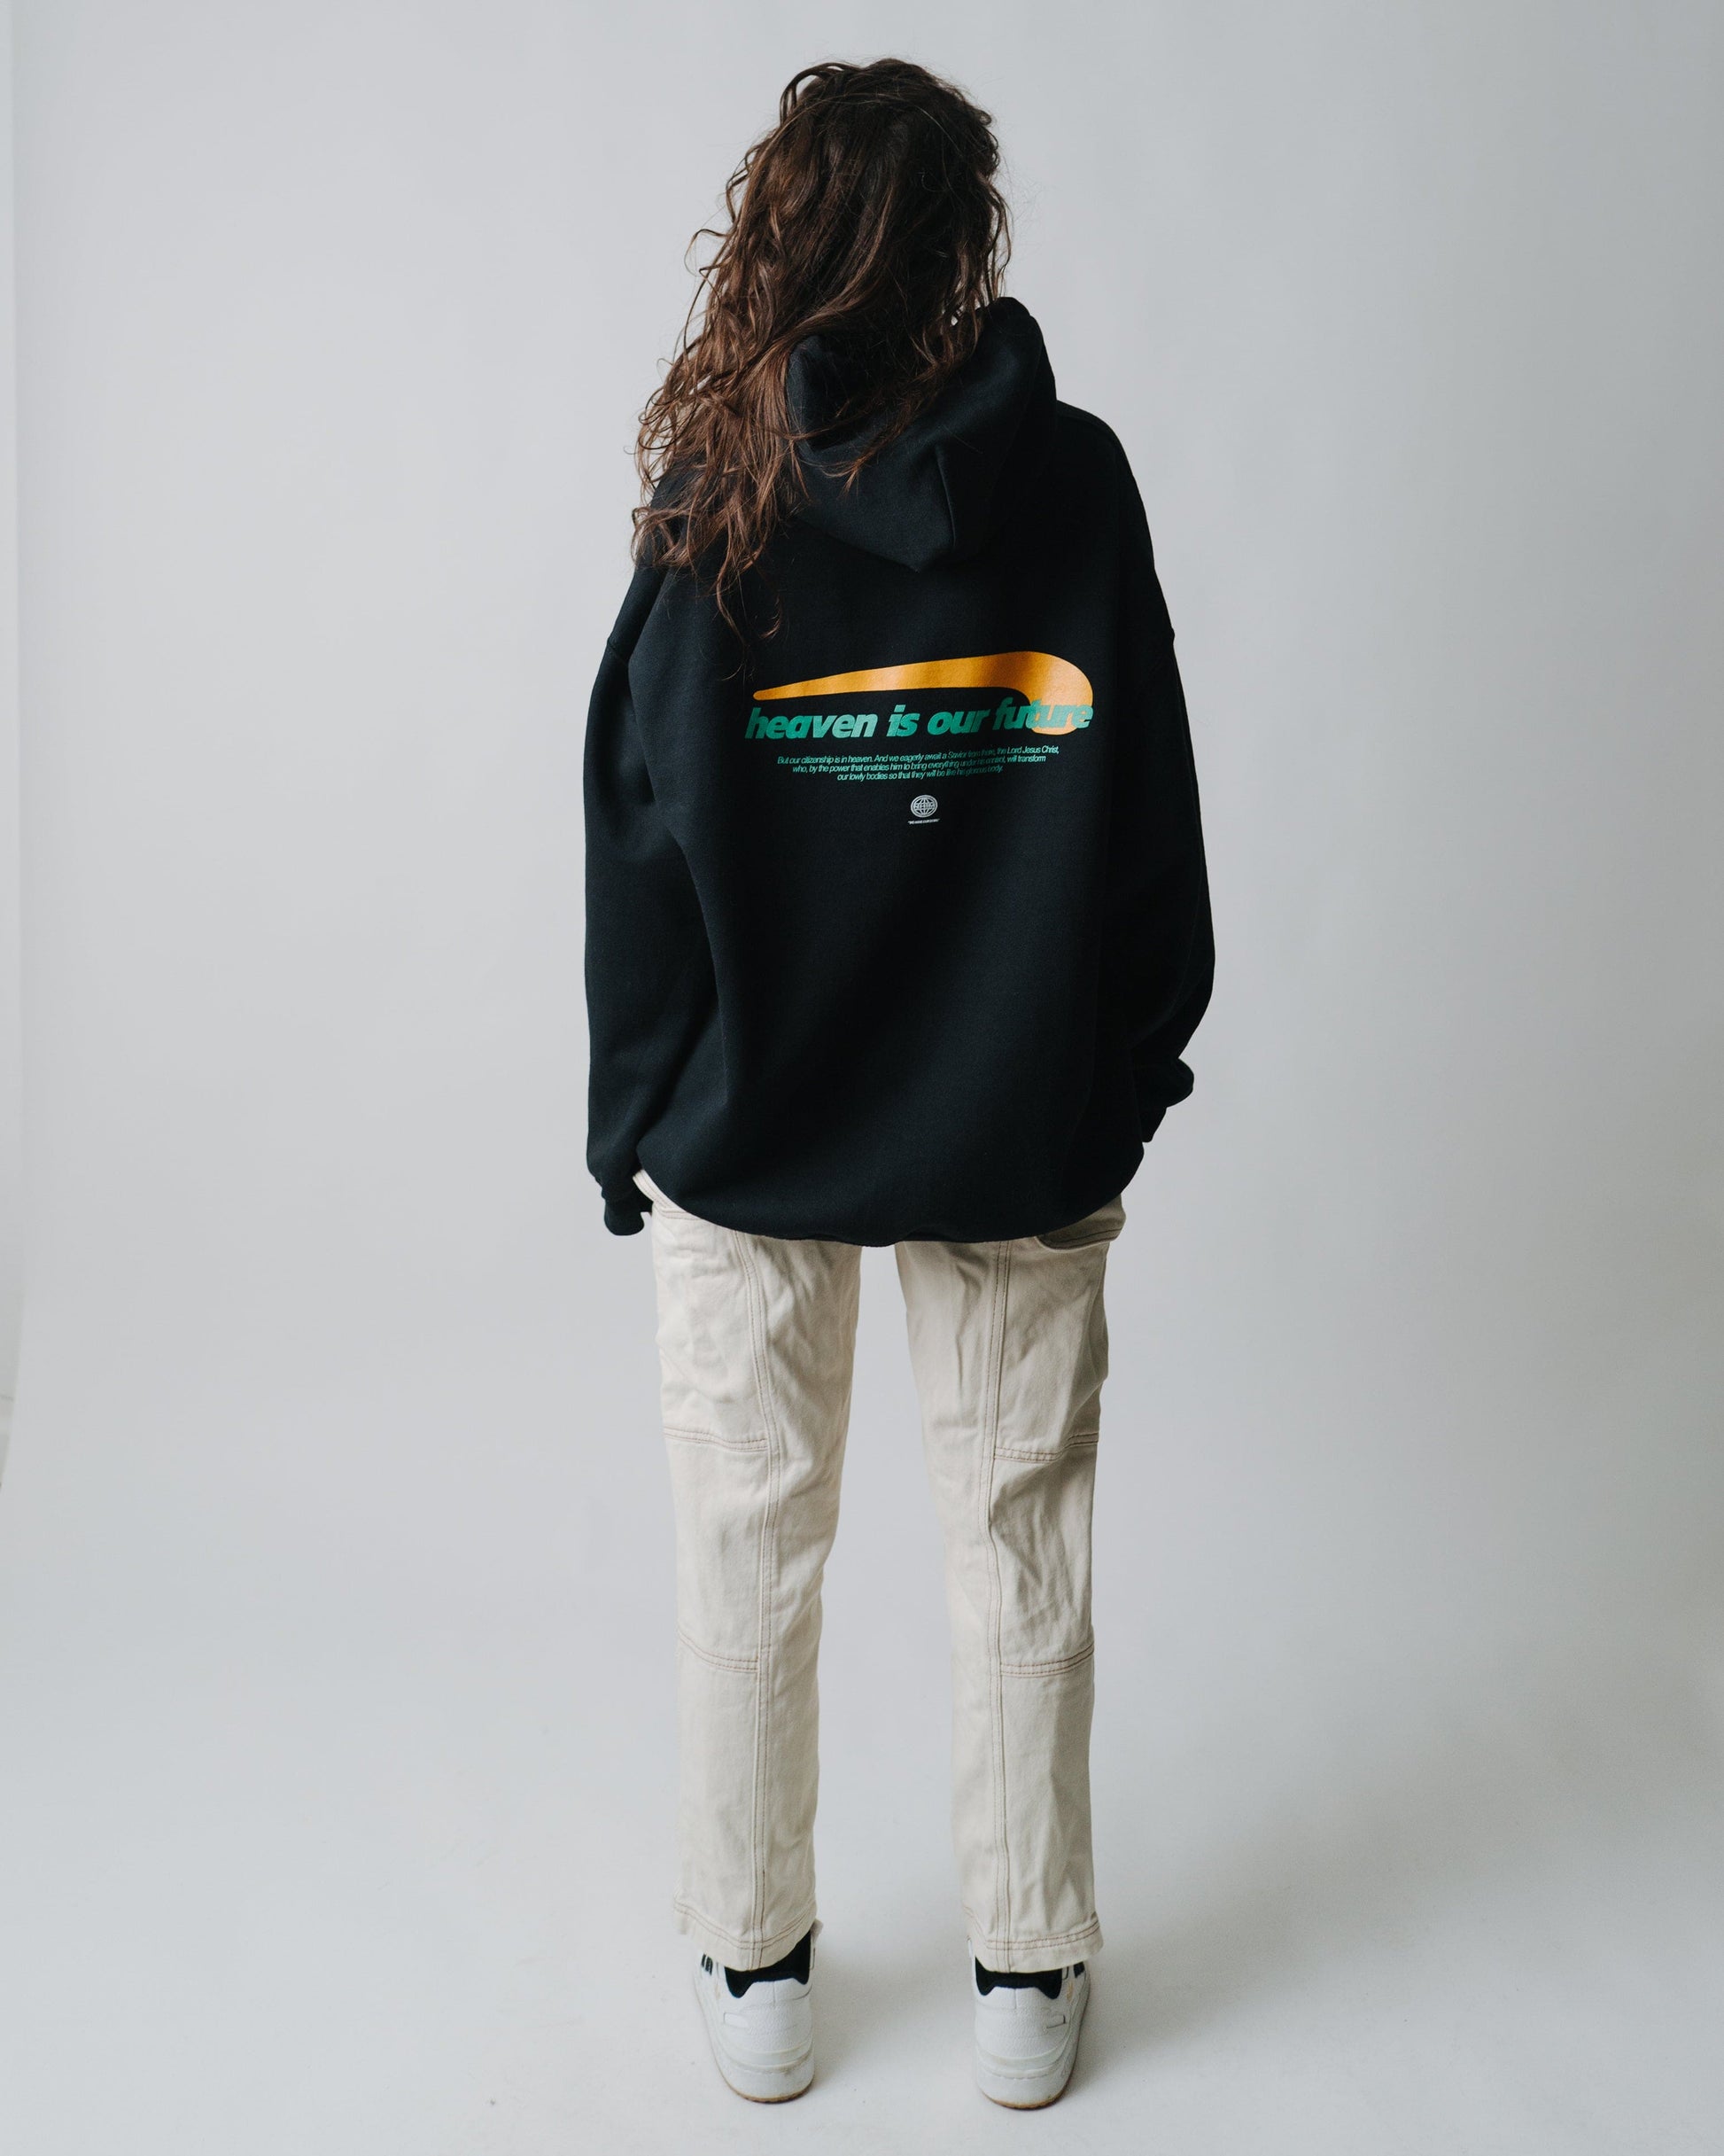 Heaven is our future black hoodie sweatshirt by NHIM Apparel Christian clothing brand